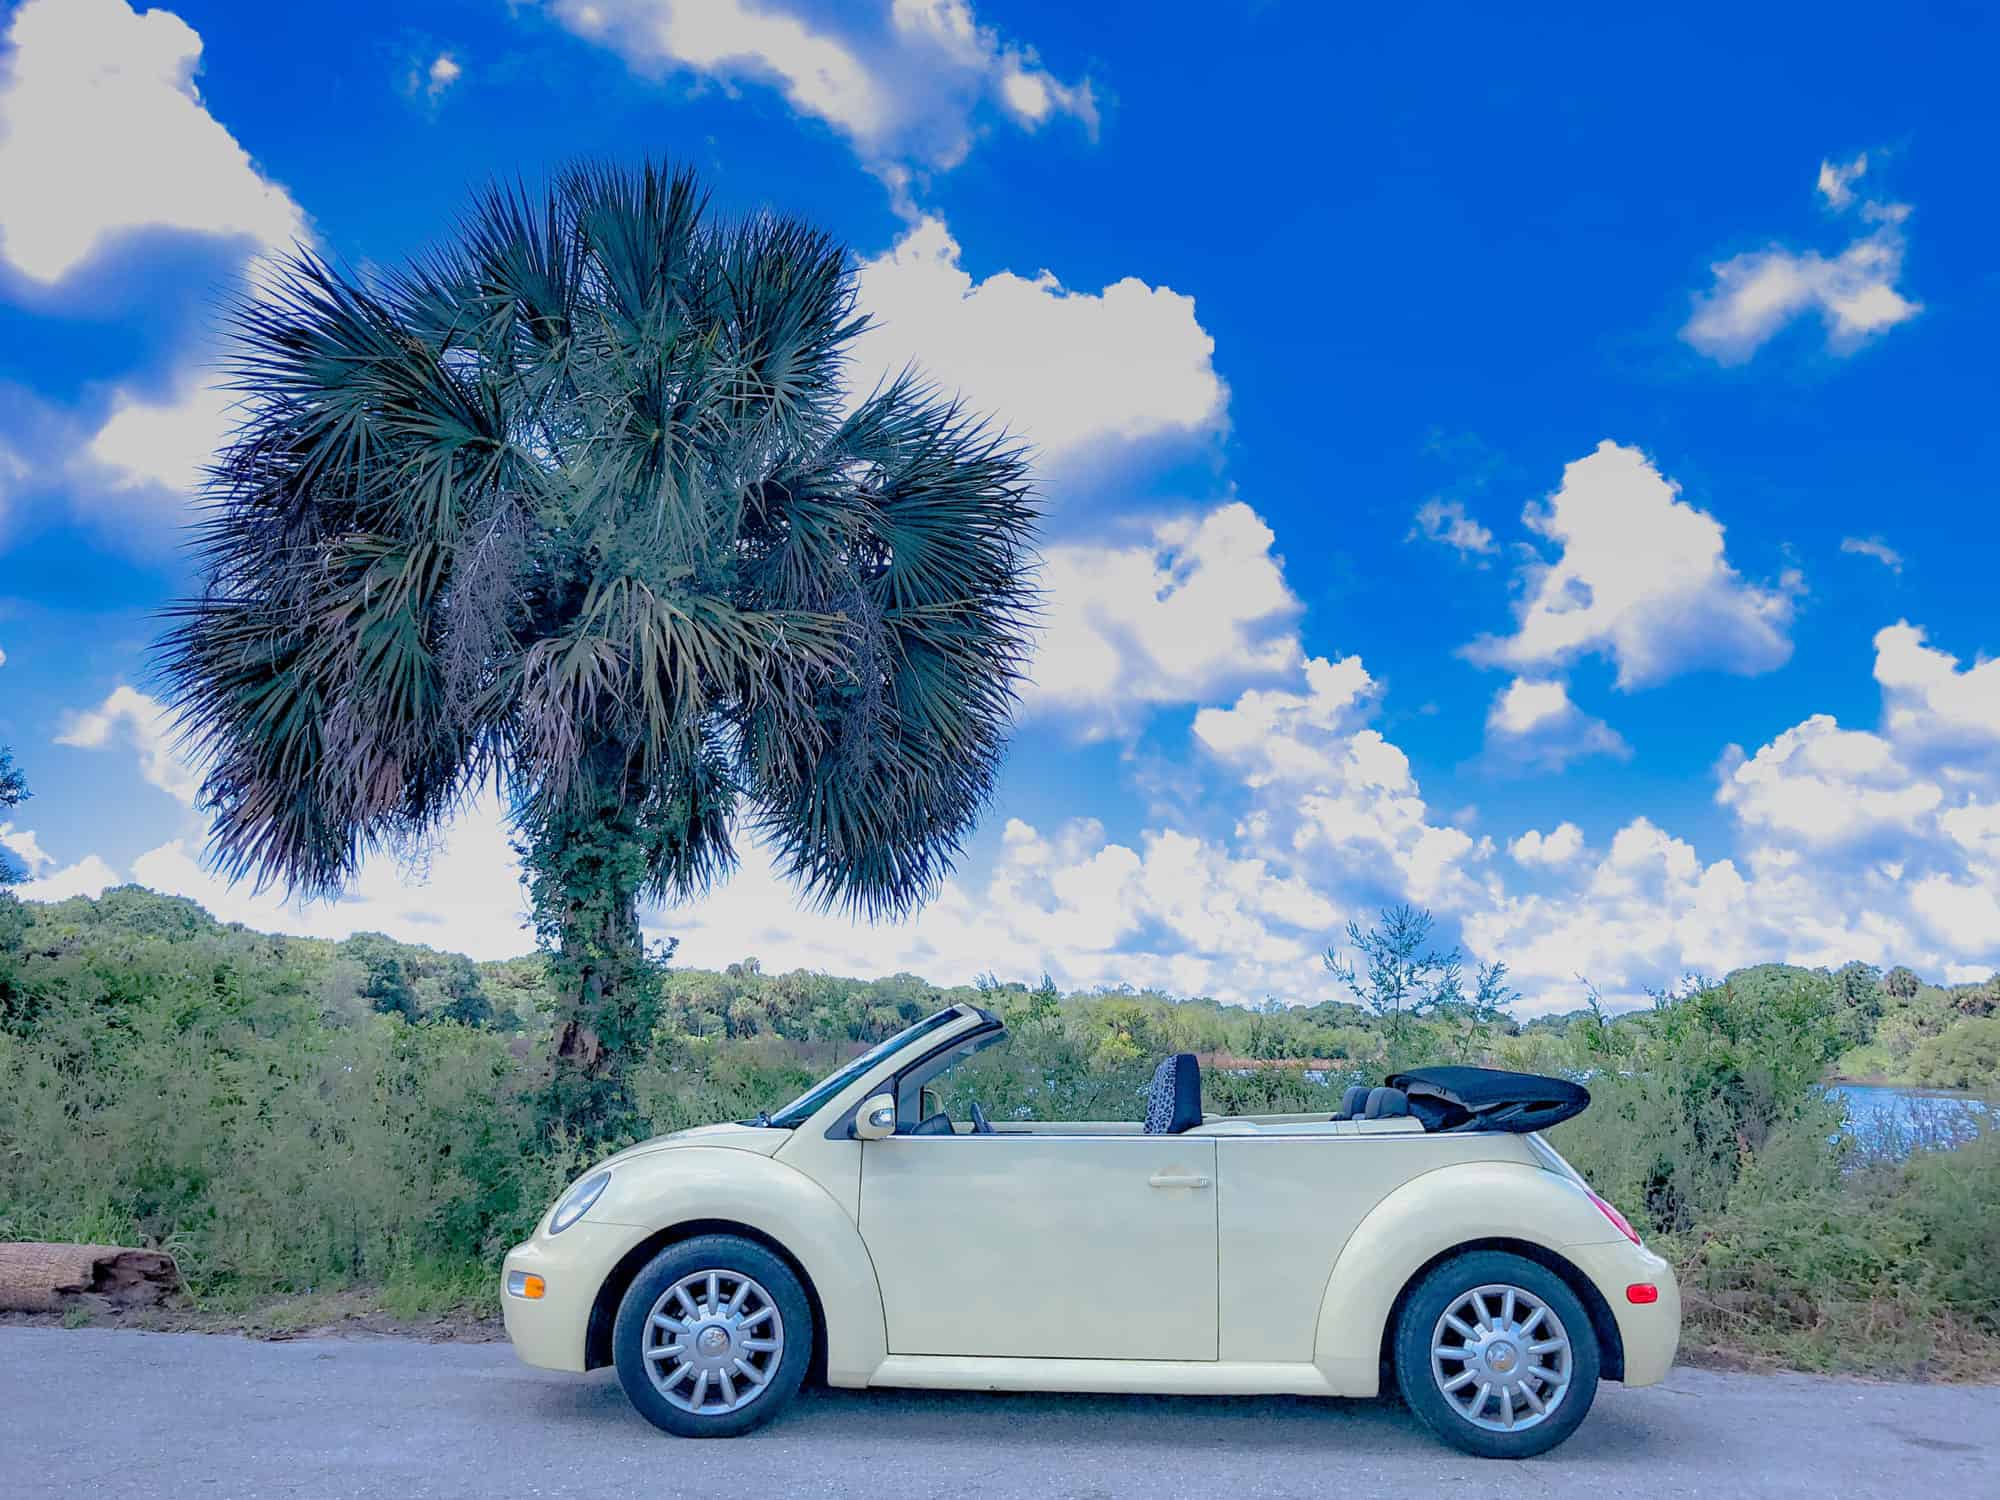 USA - Florida - Yellow car on the road